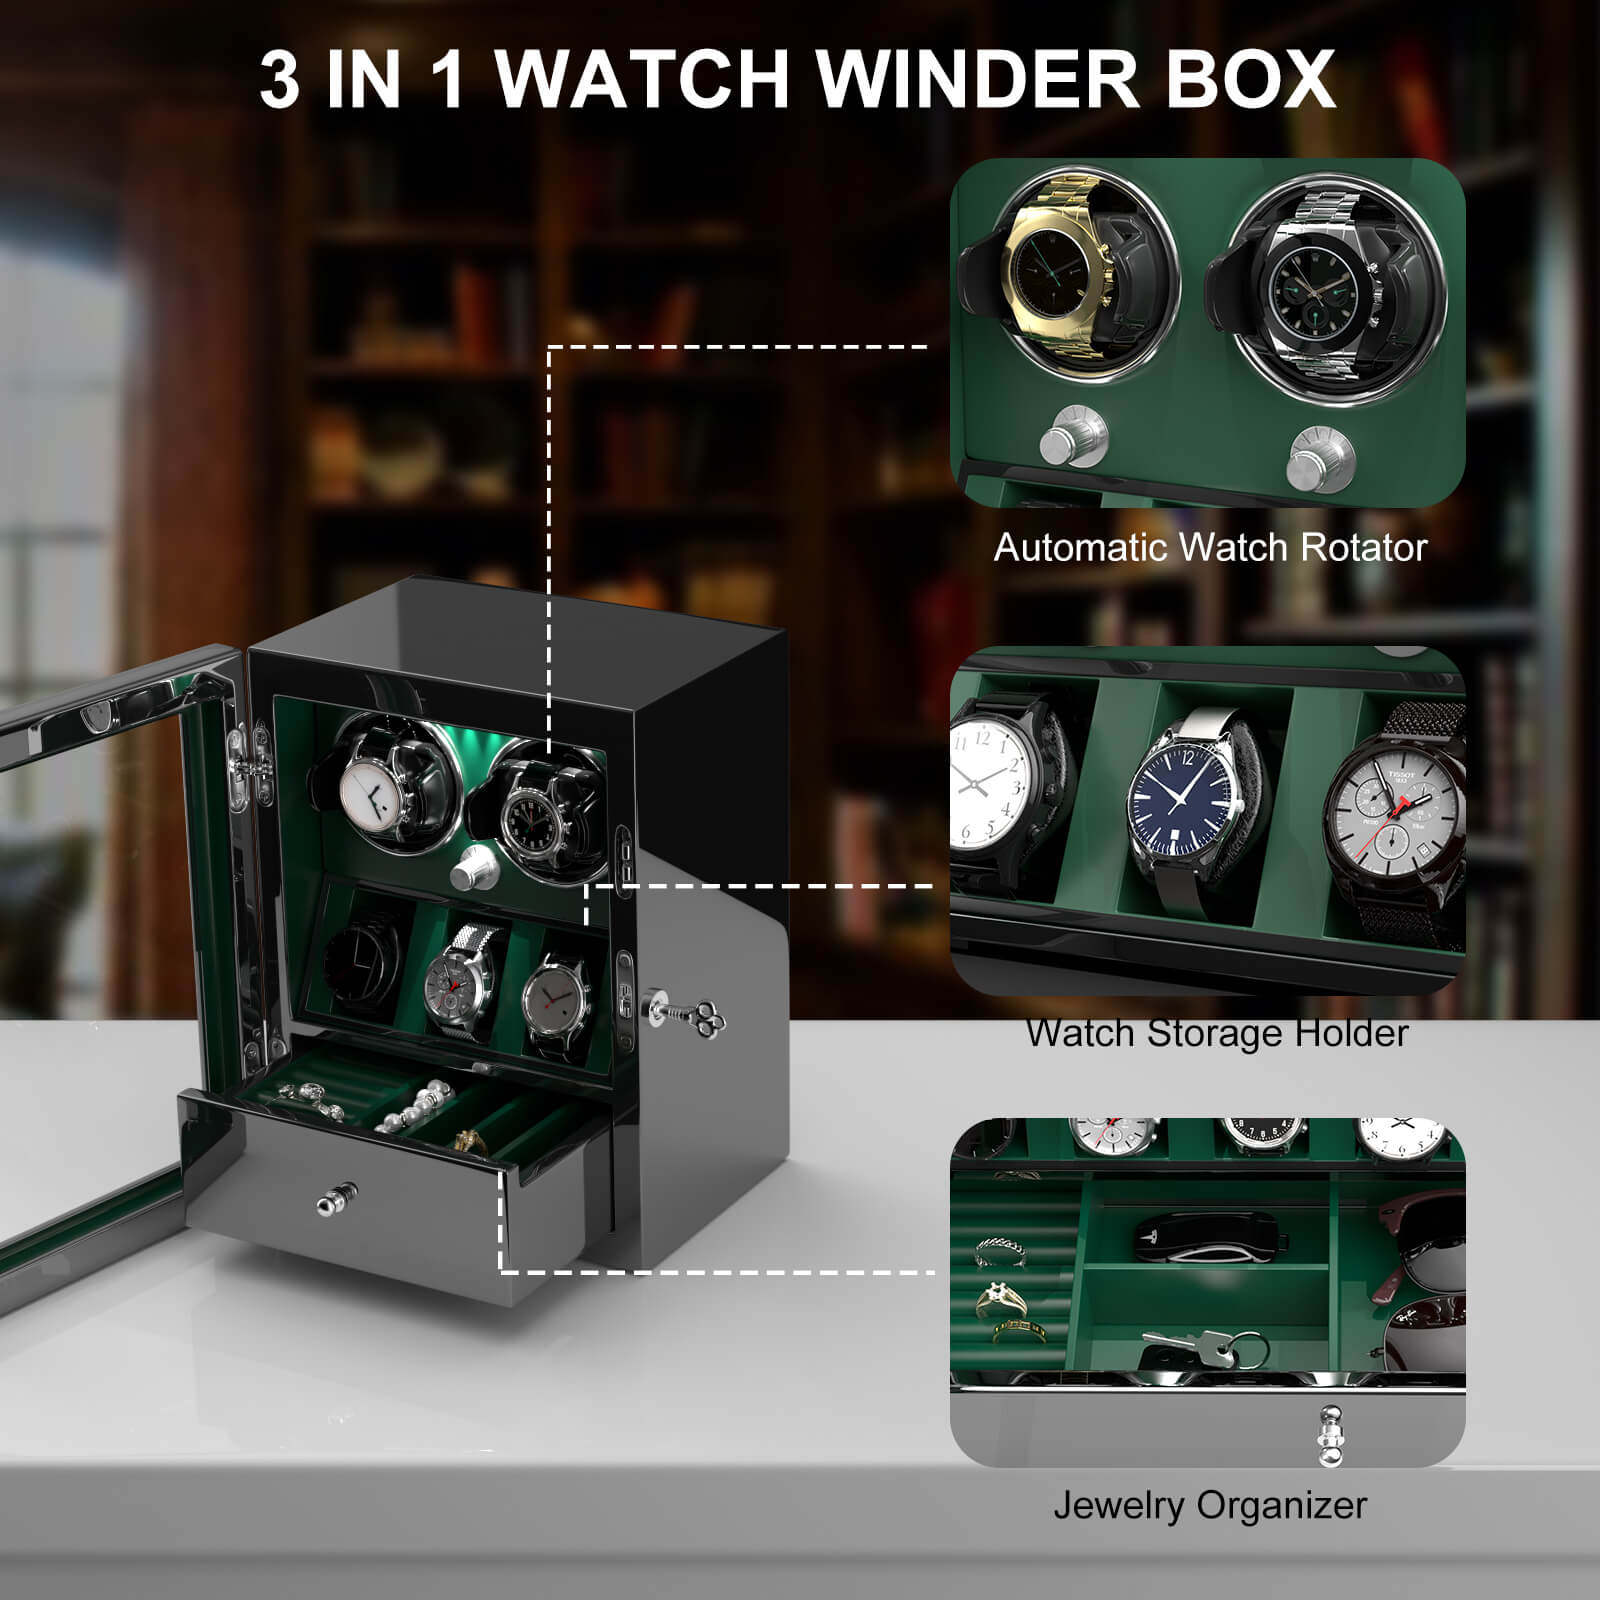 Compact 2 Watch Winders with 3 Watches Organizer Quiet Mabuchi Motor - Green